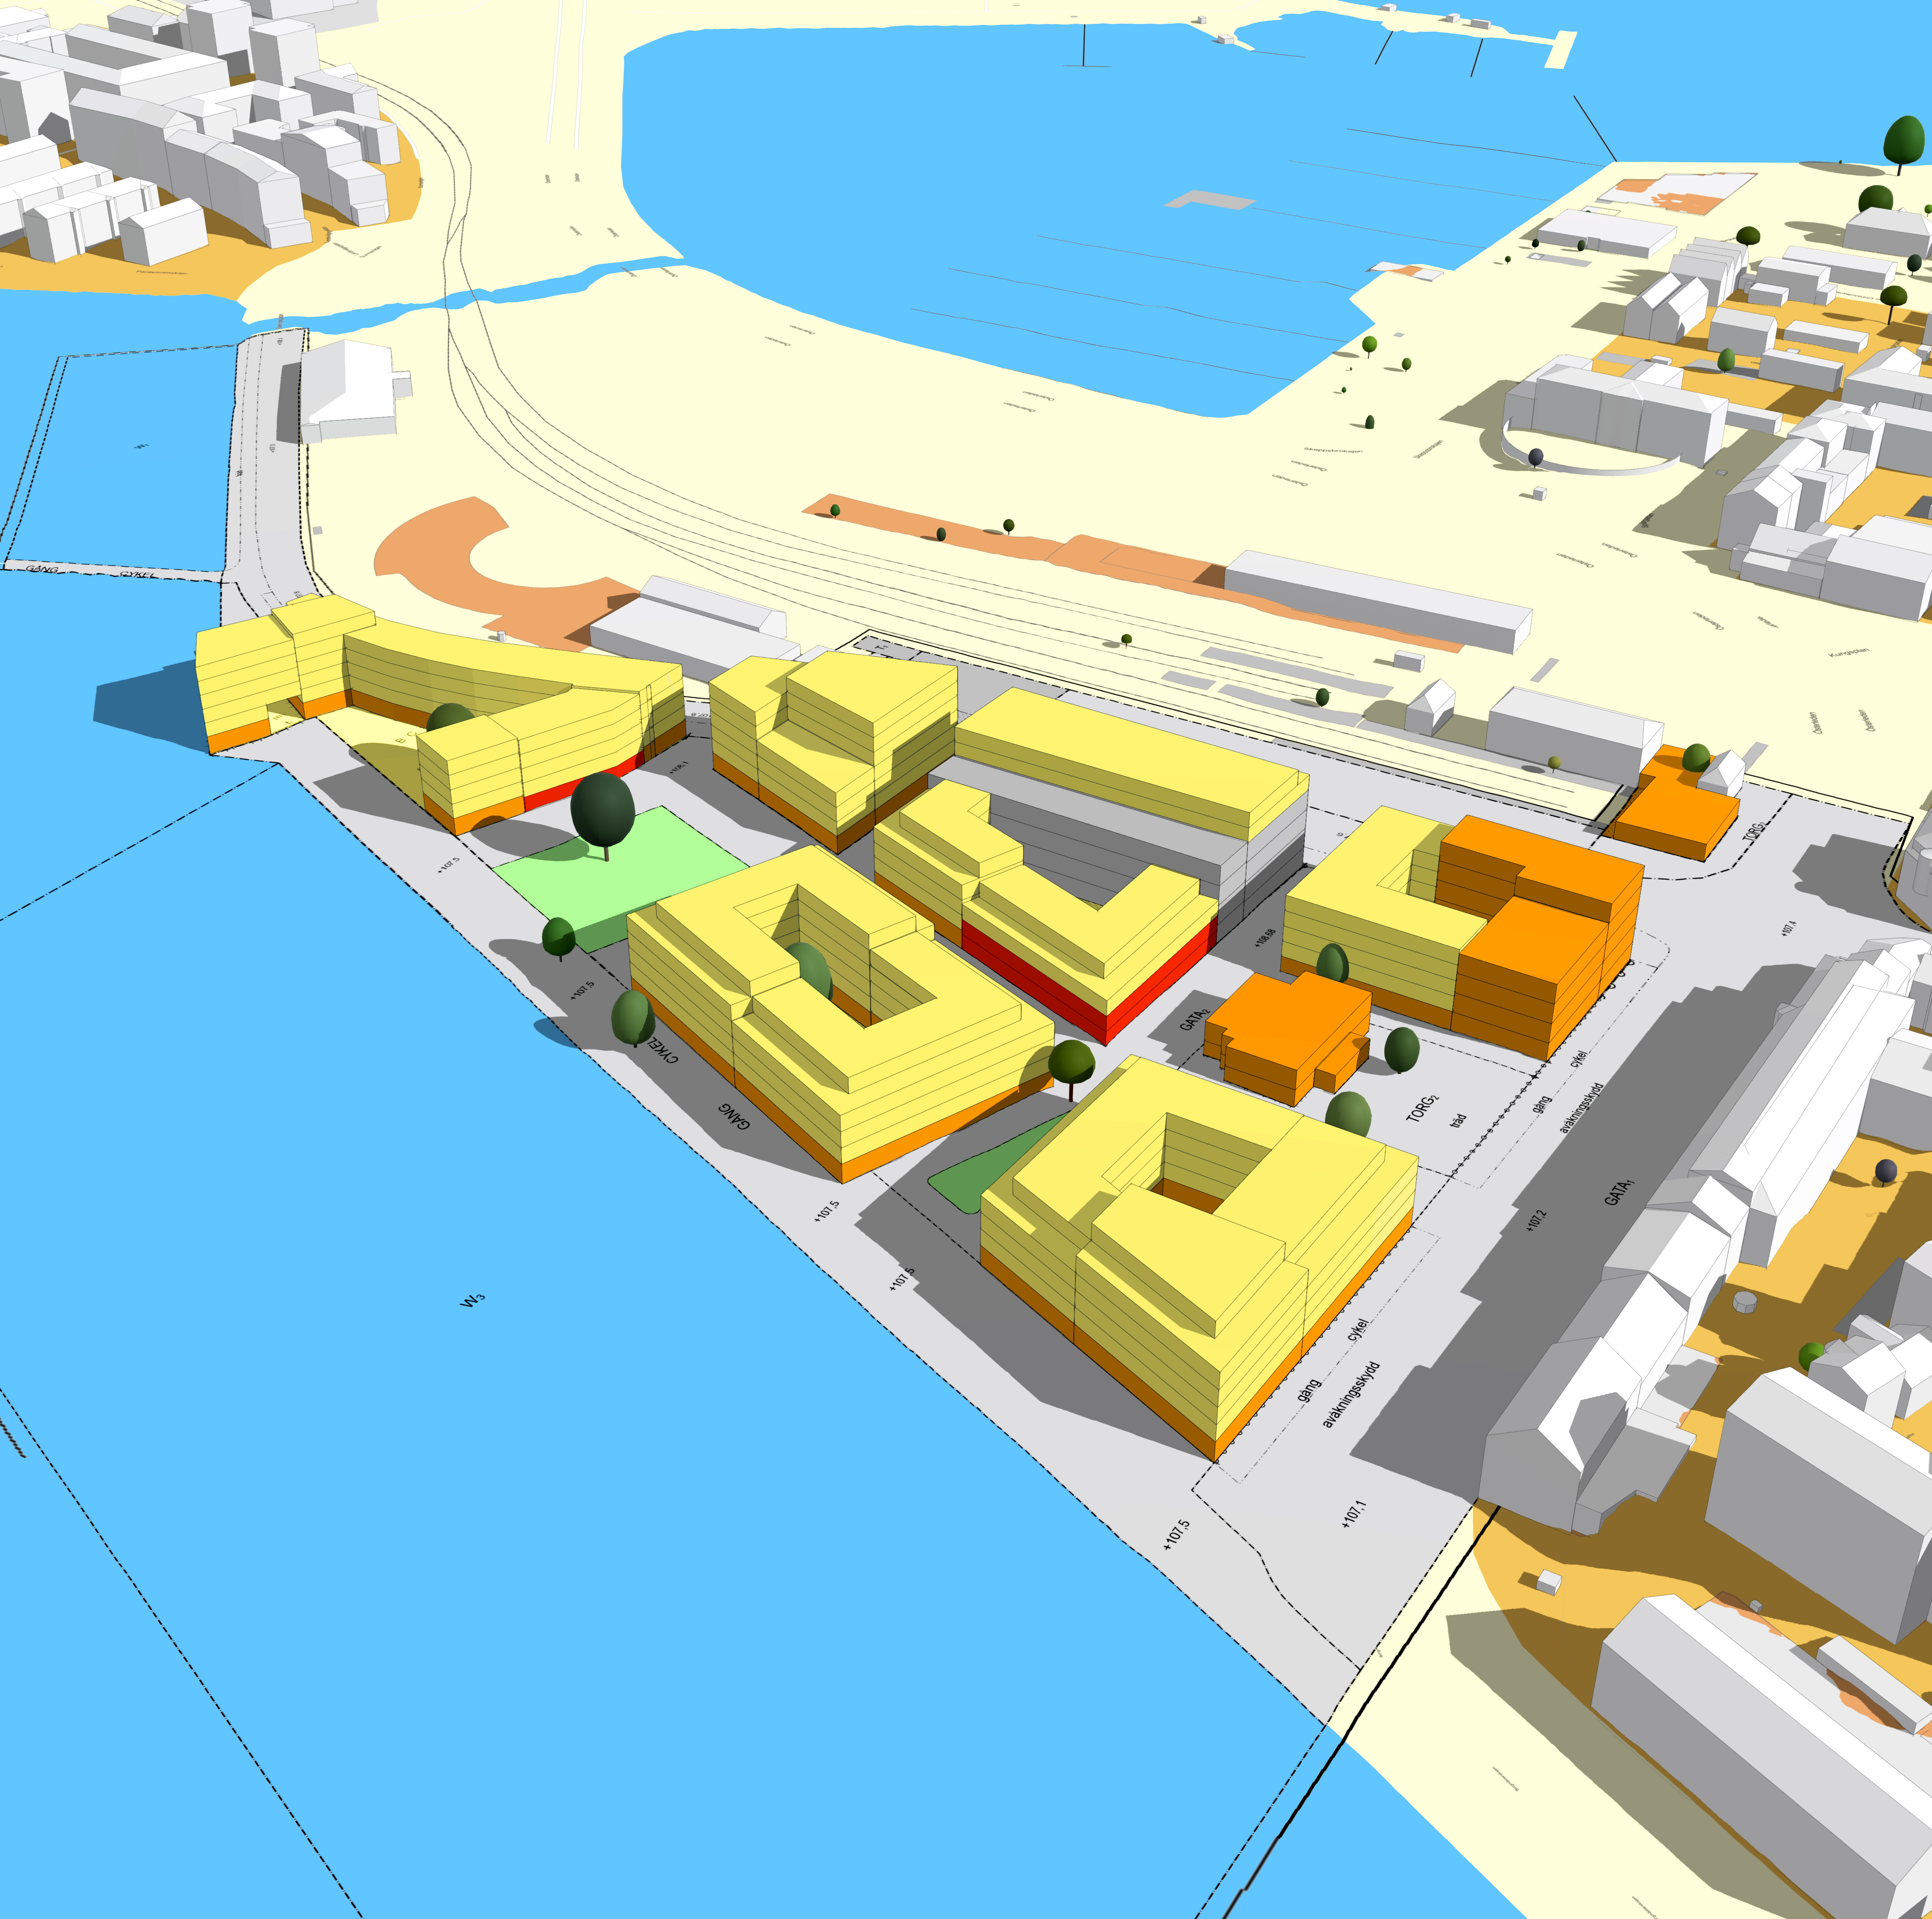 urban planning models, proposed buildings